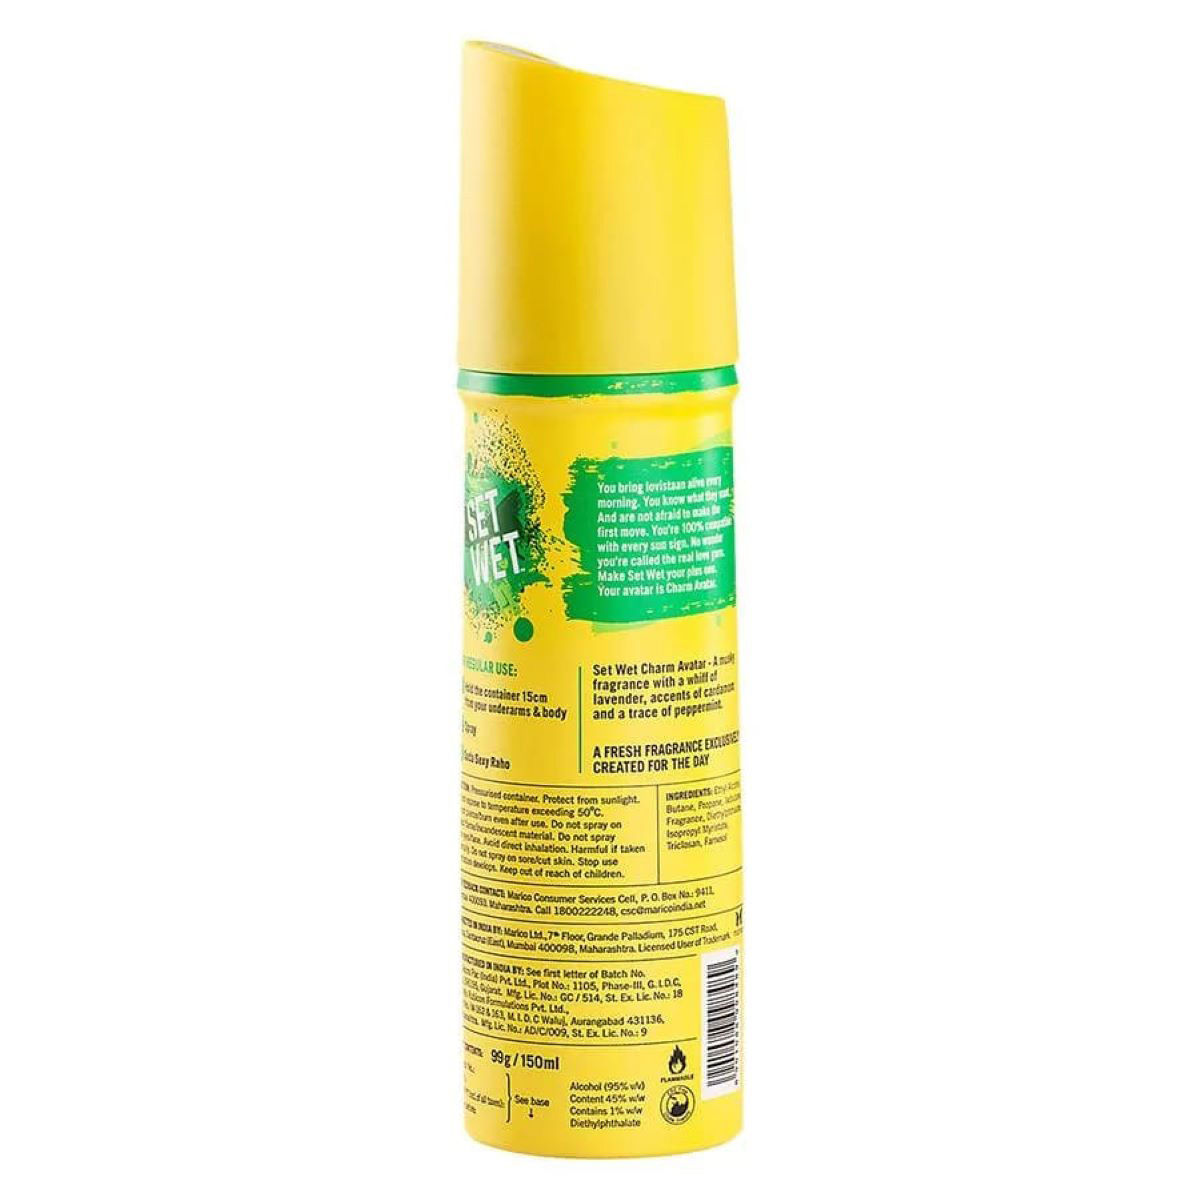 Set Wet Charm Avatar Deodorant Body Spray, 150 ml, Pack of 1 